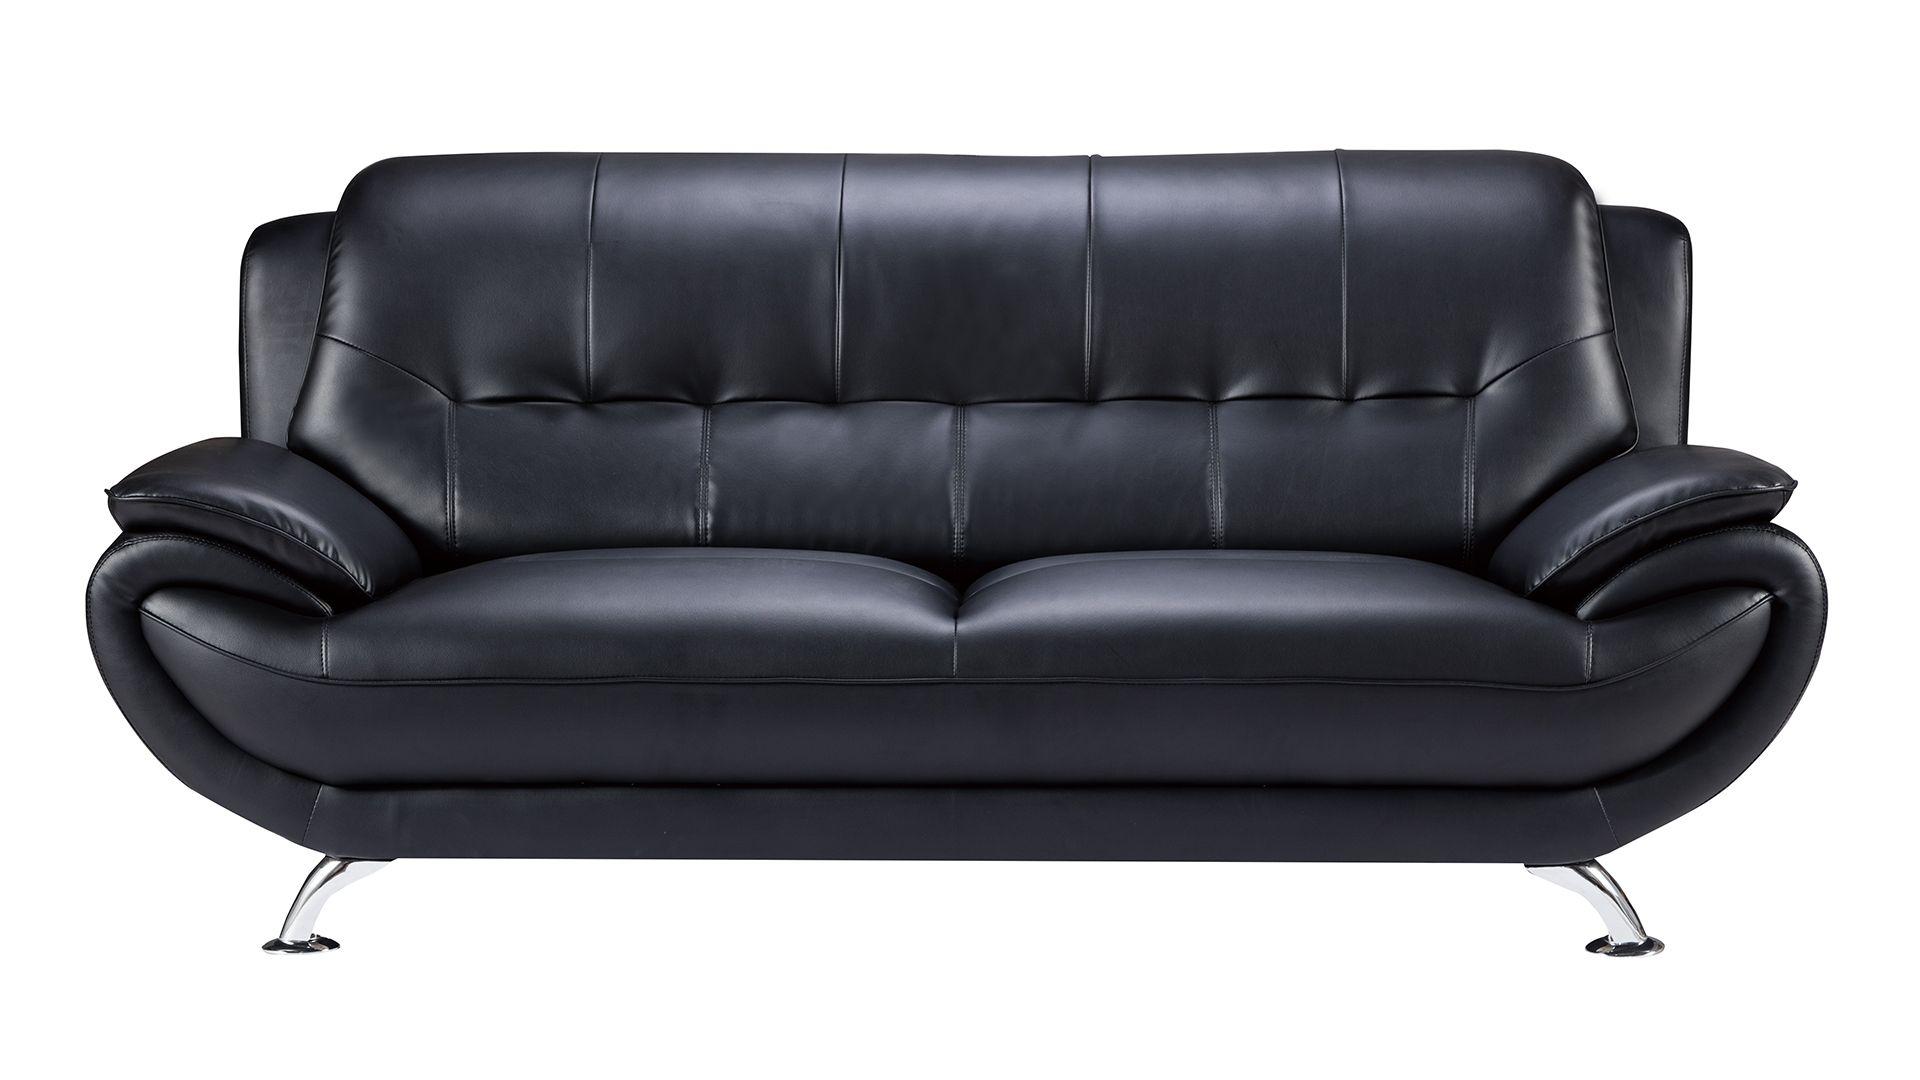 

    
American Eagle Furniture AE208-BK-2PC Sofa Set Black AE208-BK-2PC
